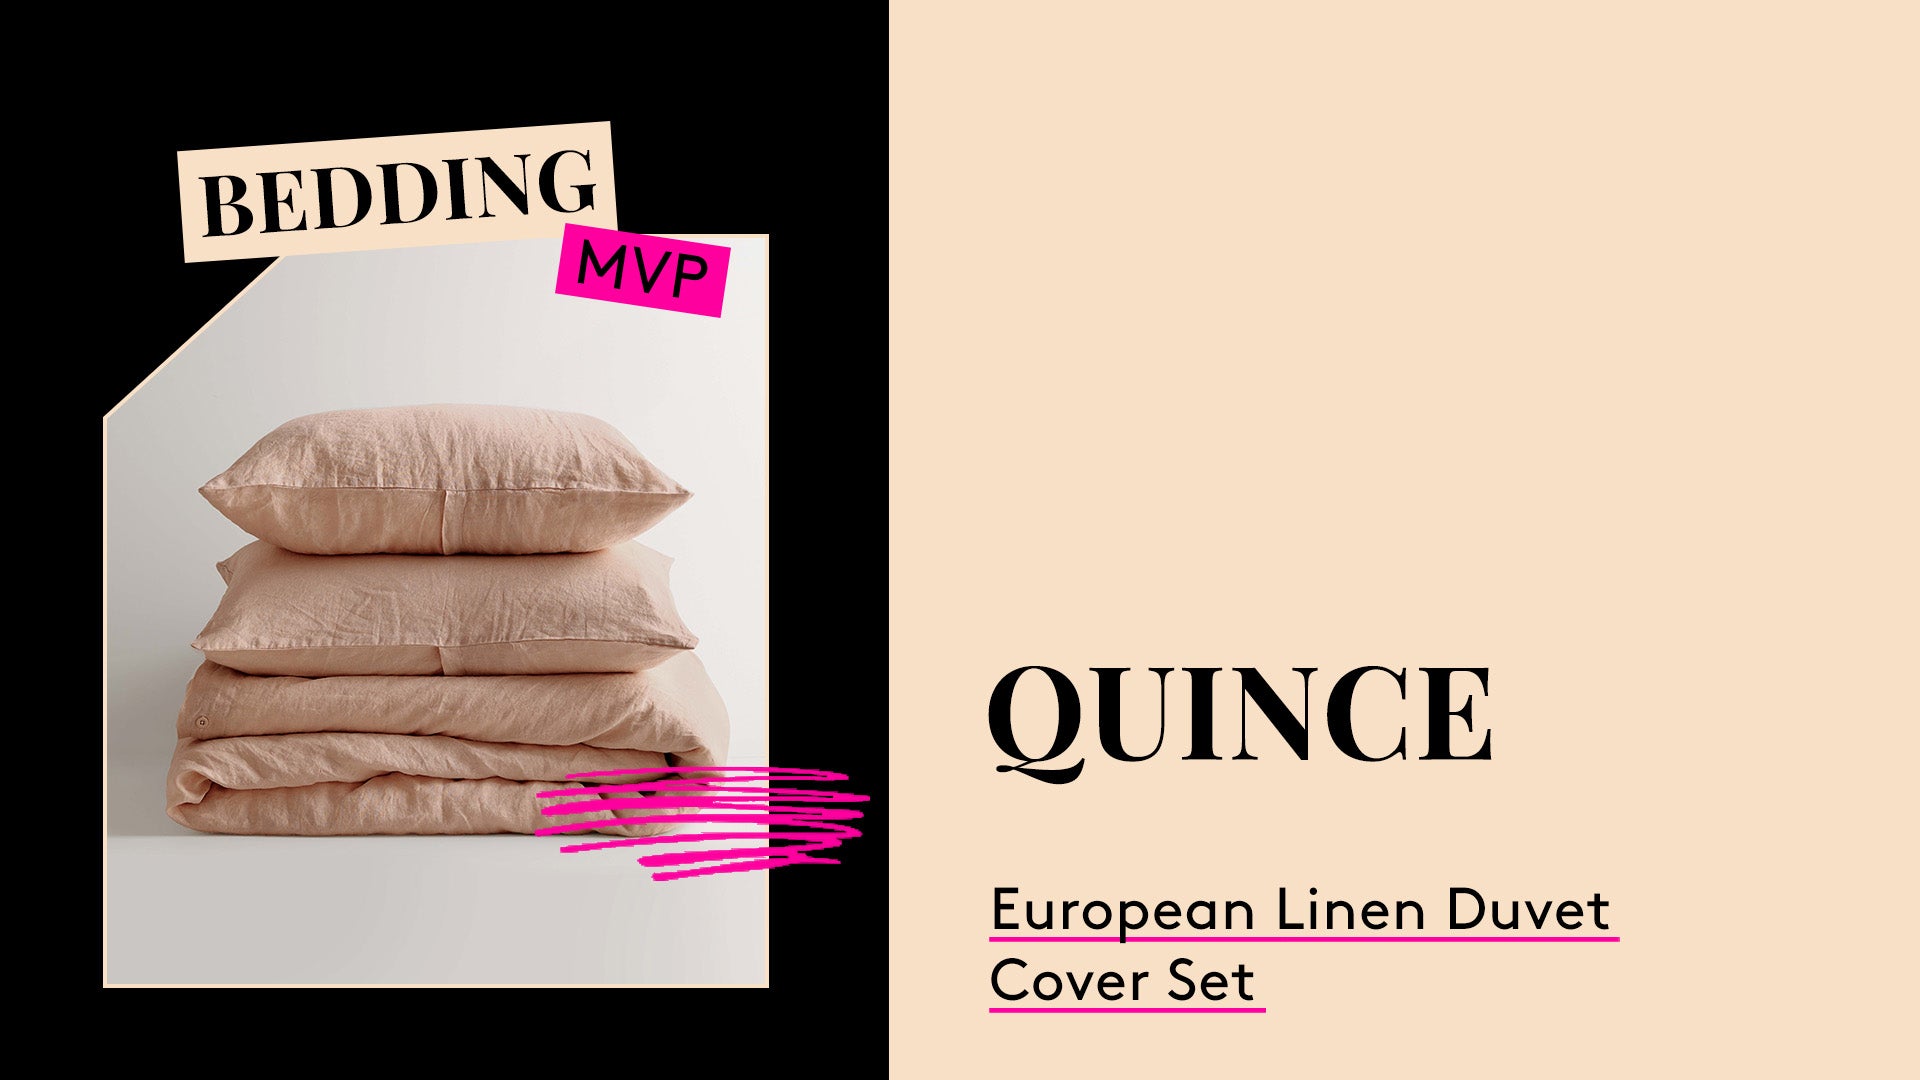 Bedding MVP. Quince European Linen Duvet Cover Set.